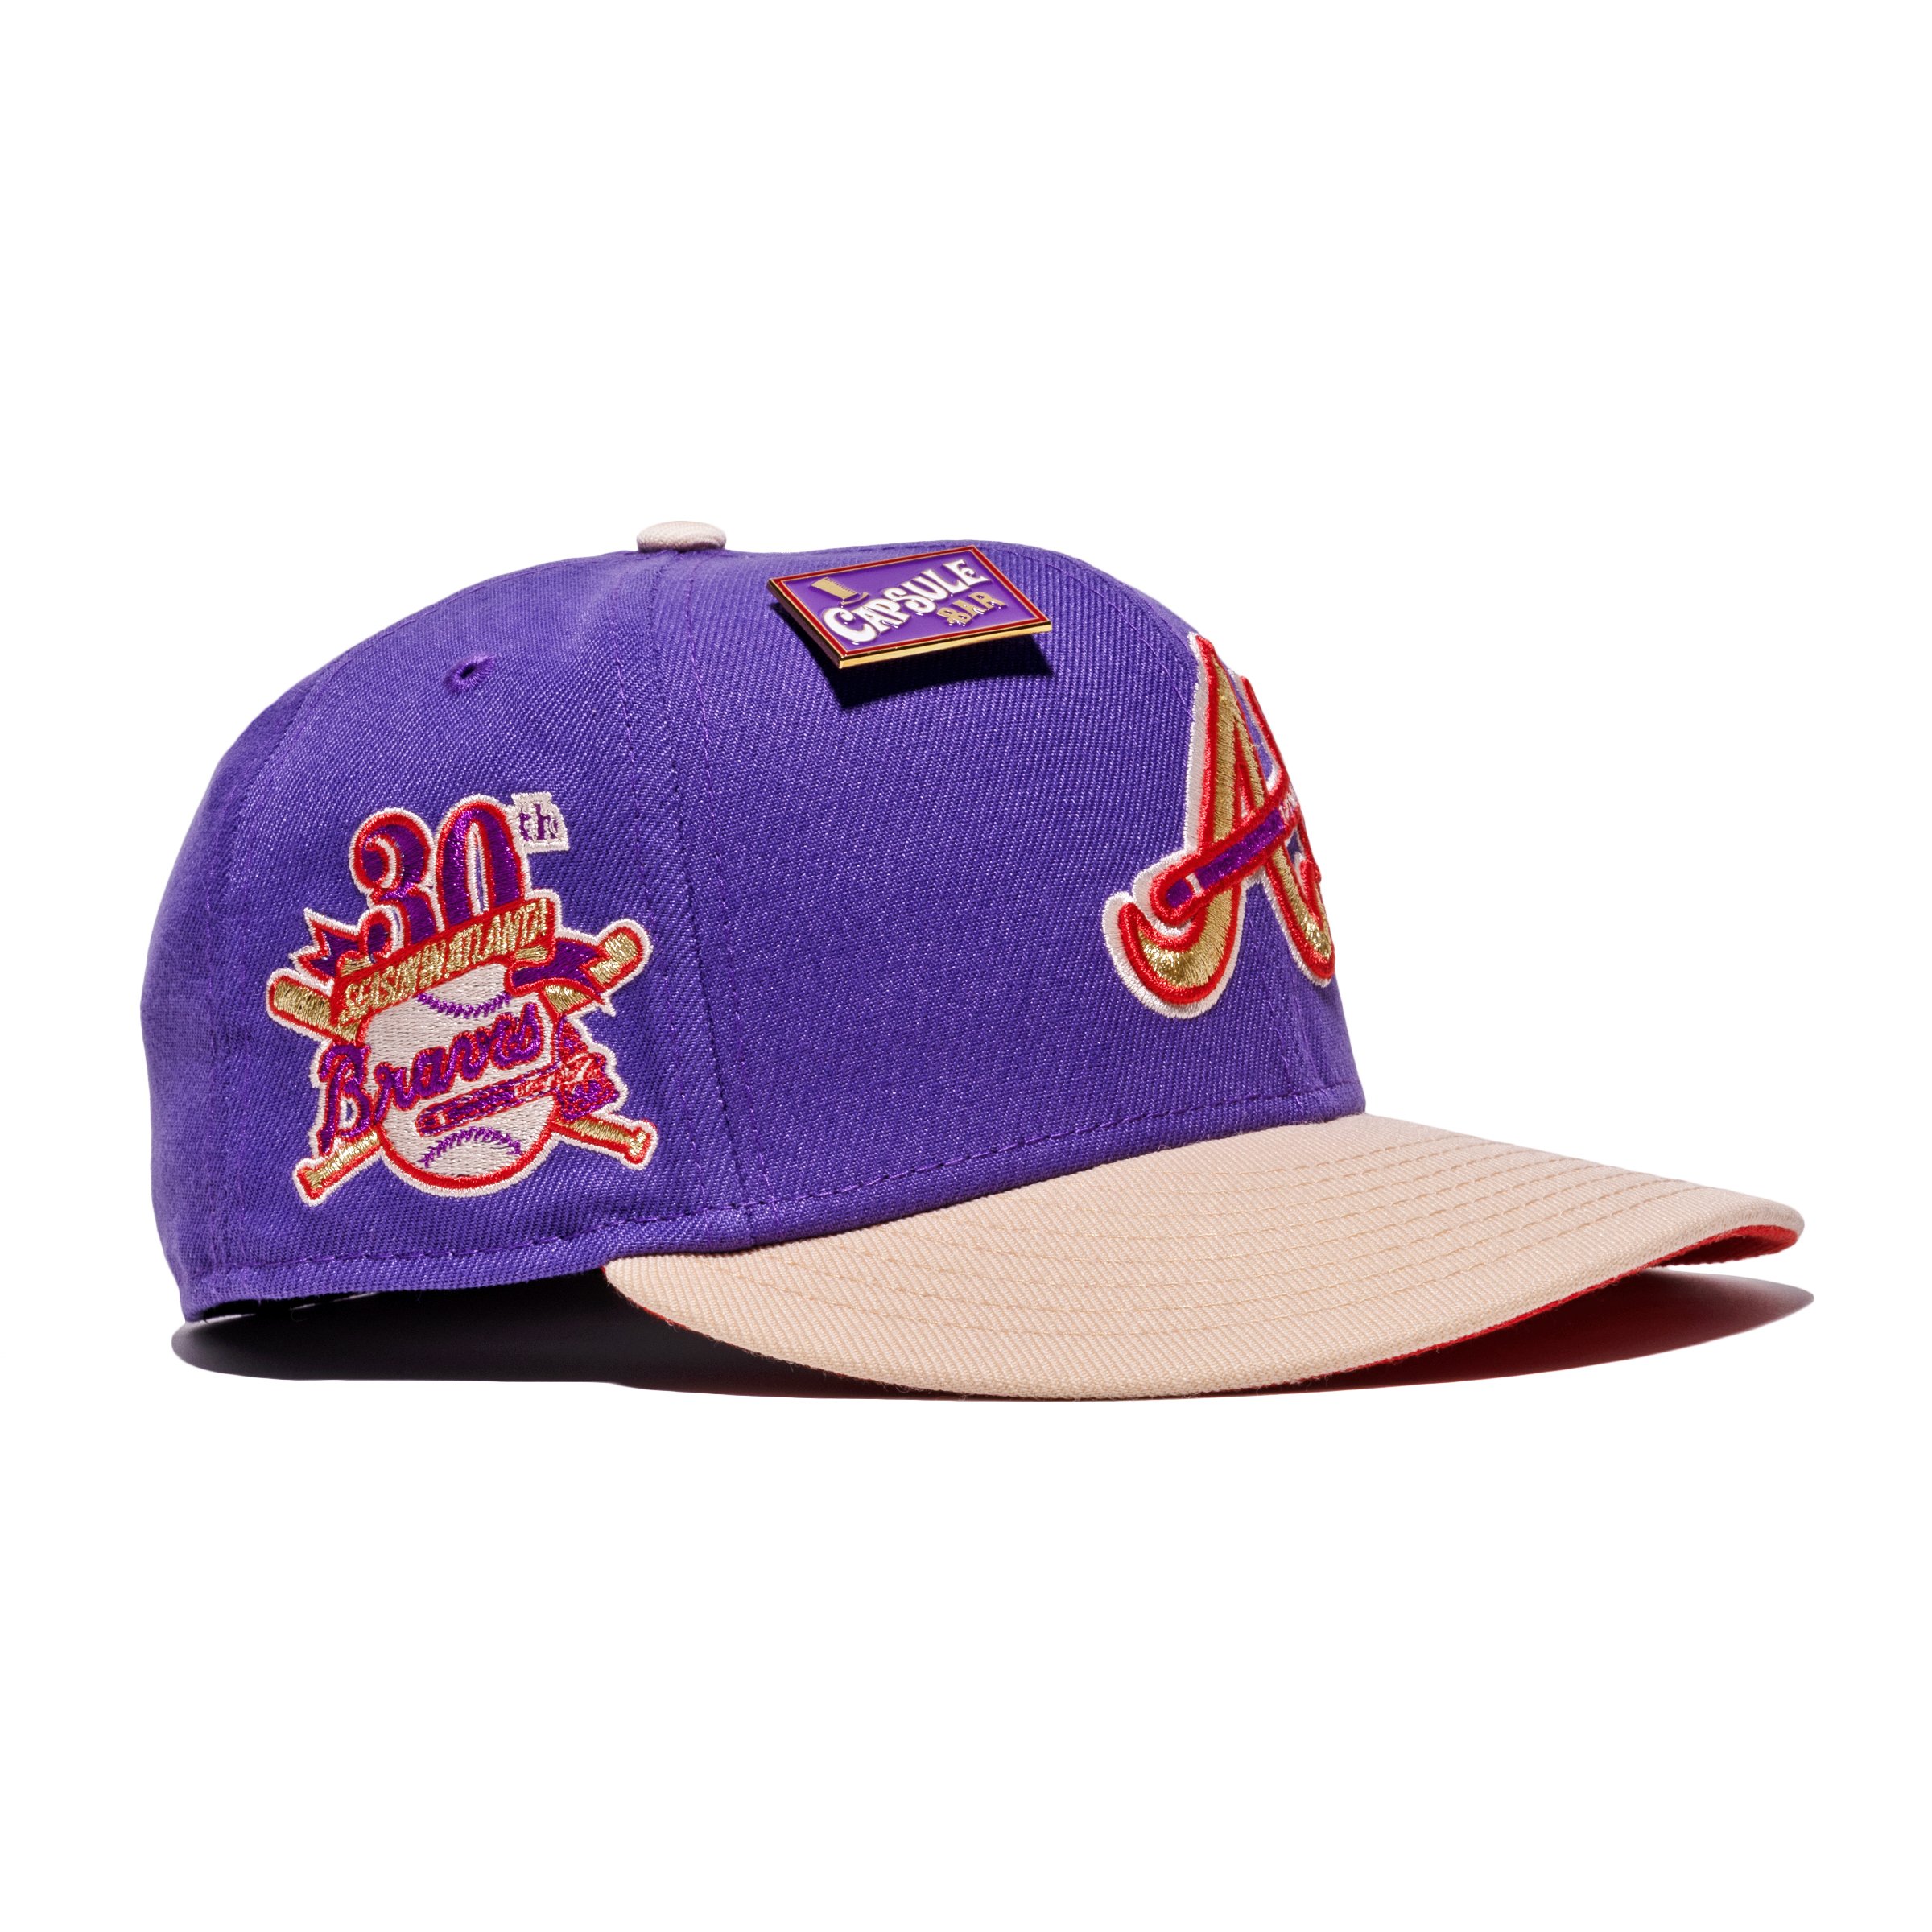 New Era Arizona Diamondbacks Capsule Bar Collection 20th Anniversary 59Fifty Fitted Hat Purple/Red